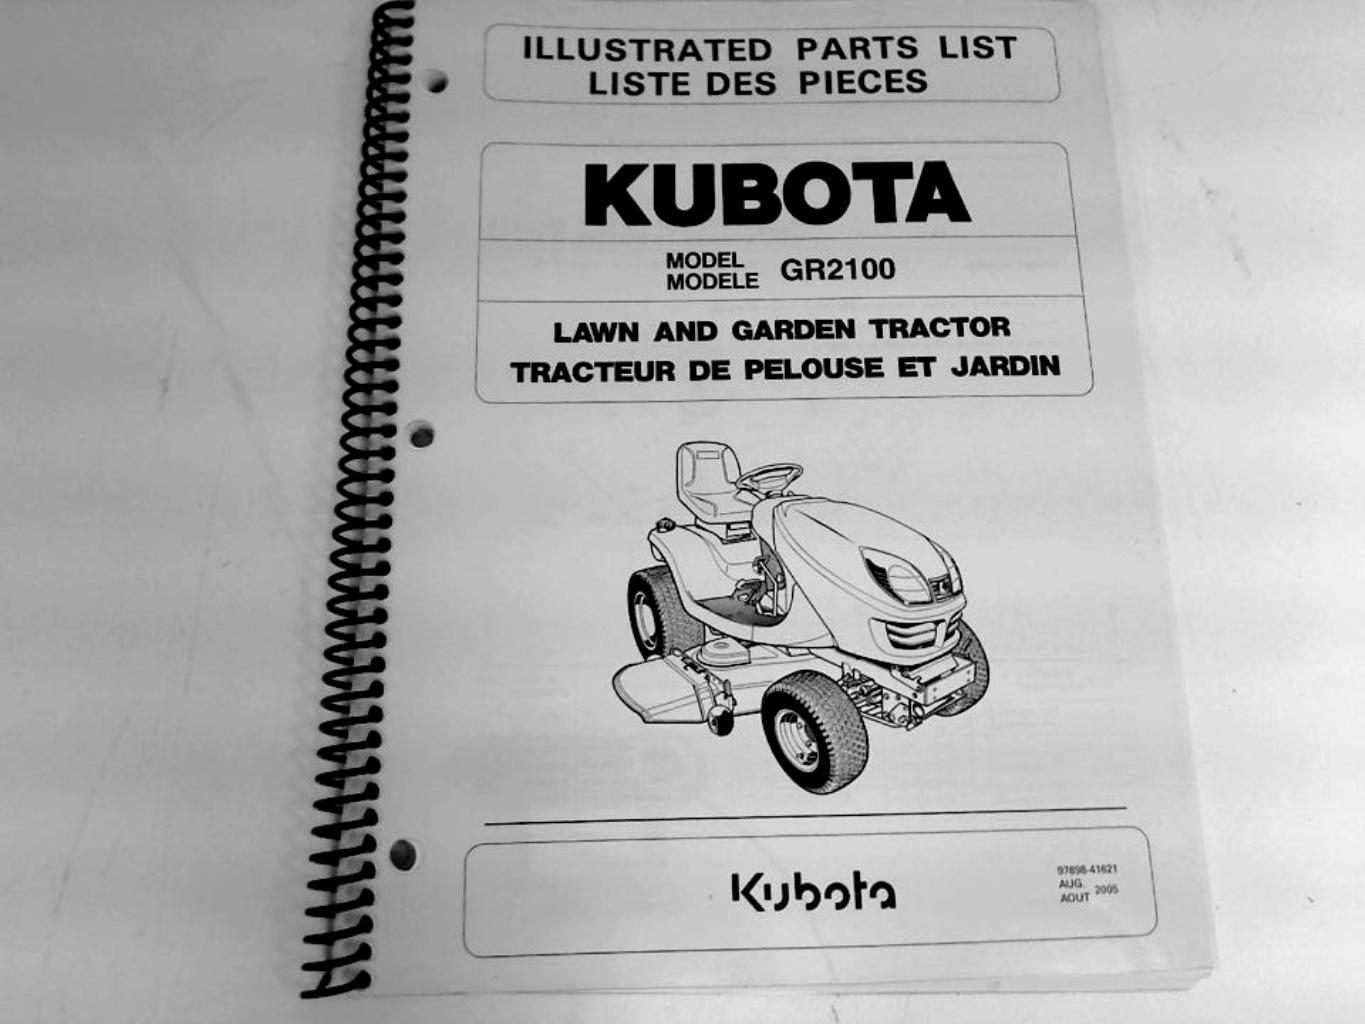 Kubota #97898-41621 GR2100 Parts Manual